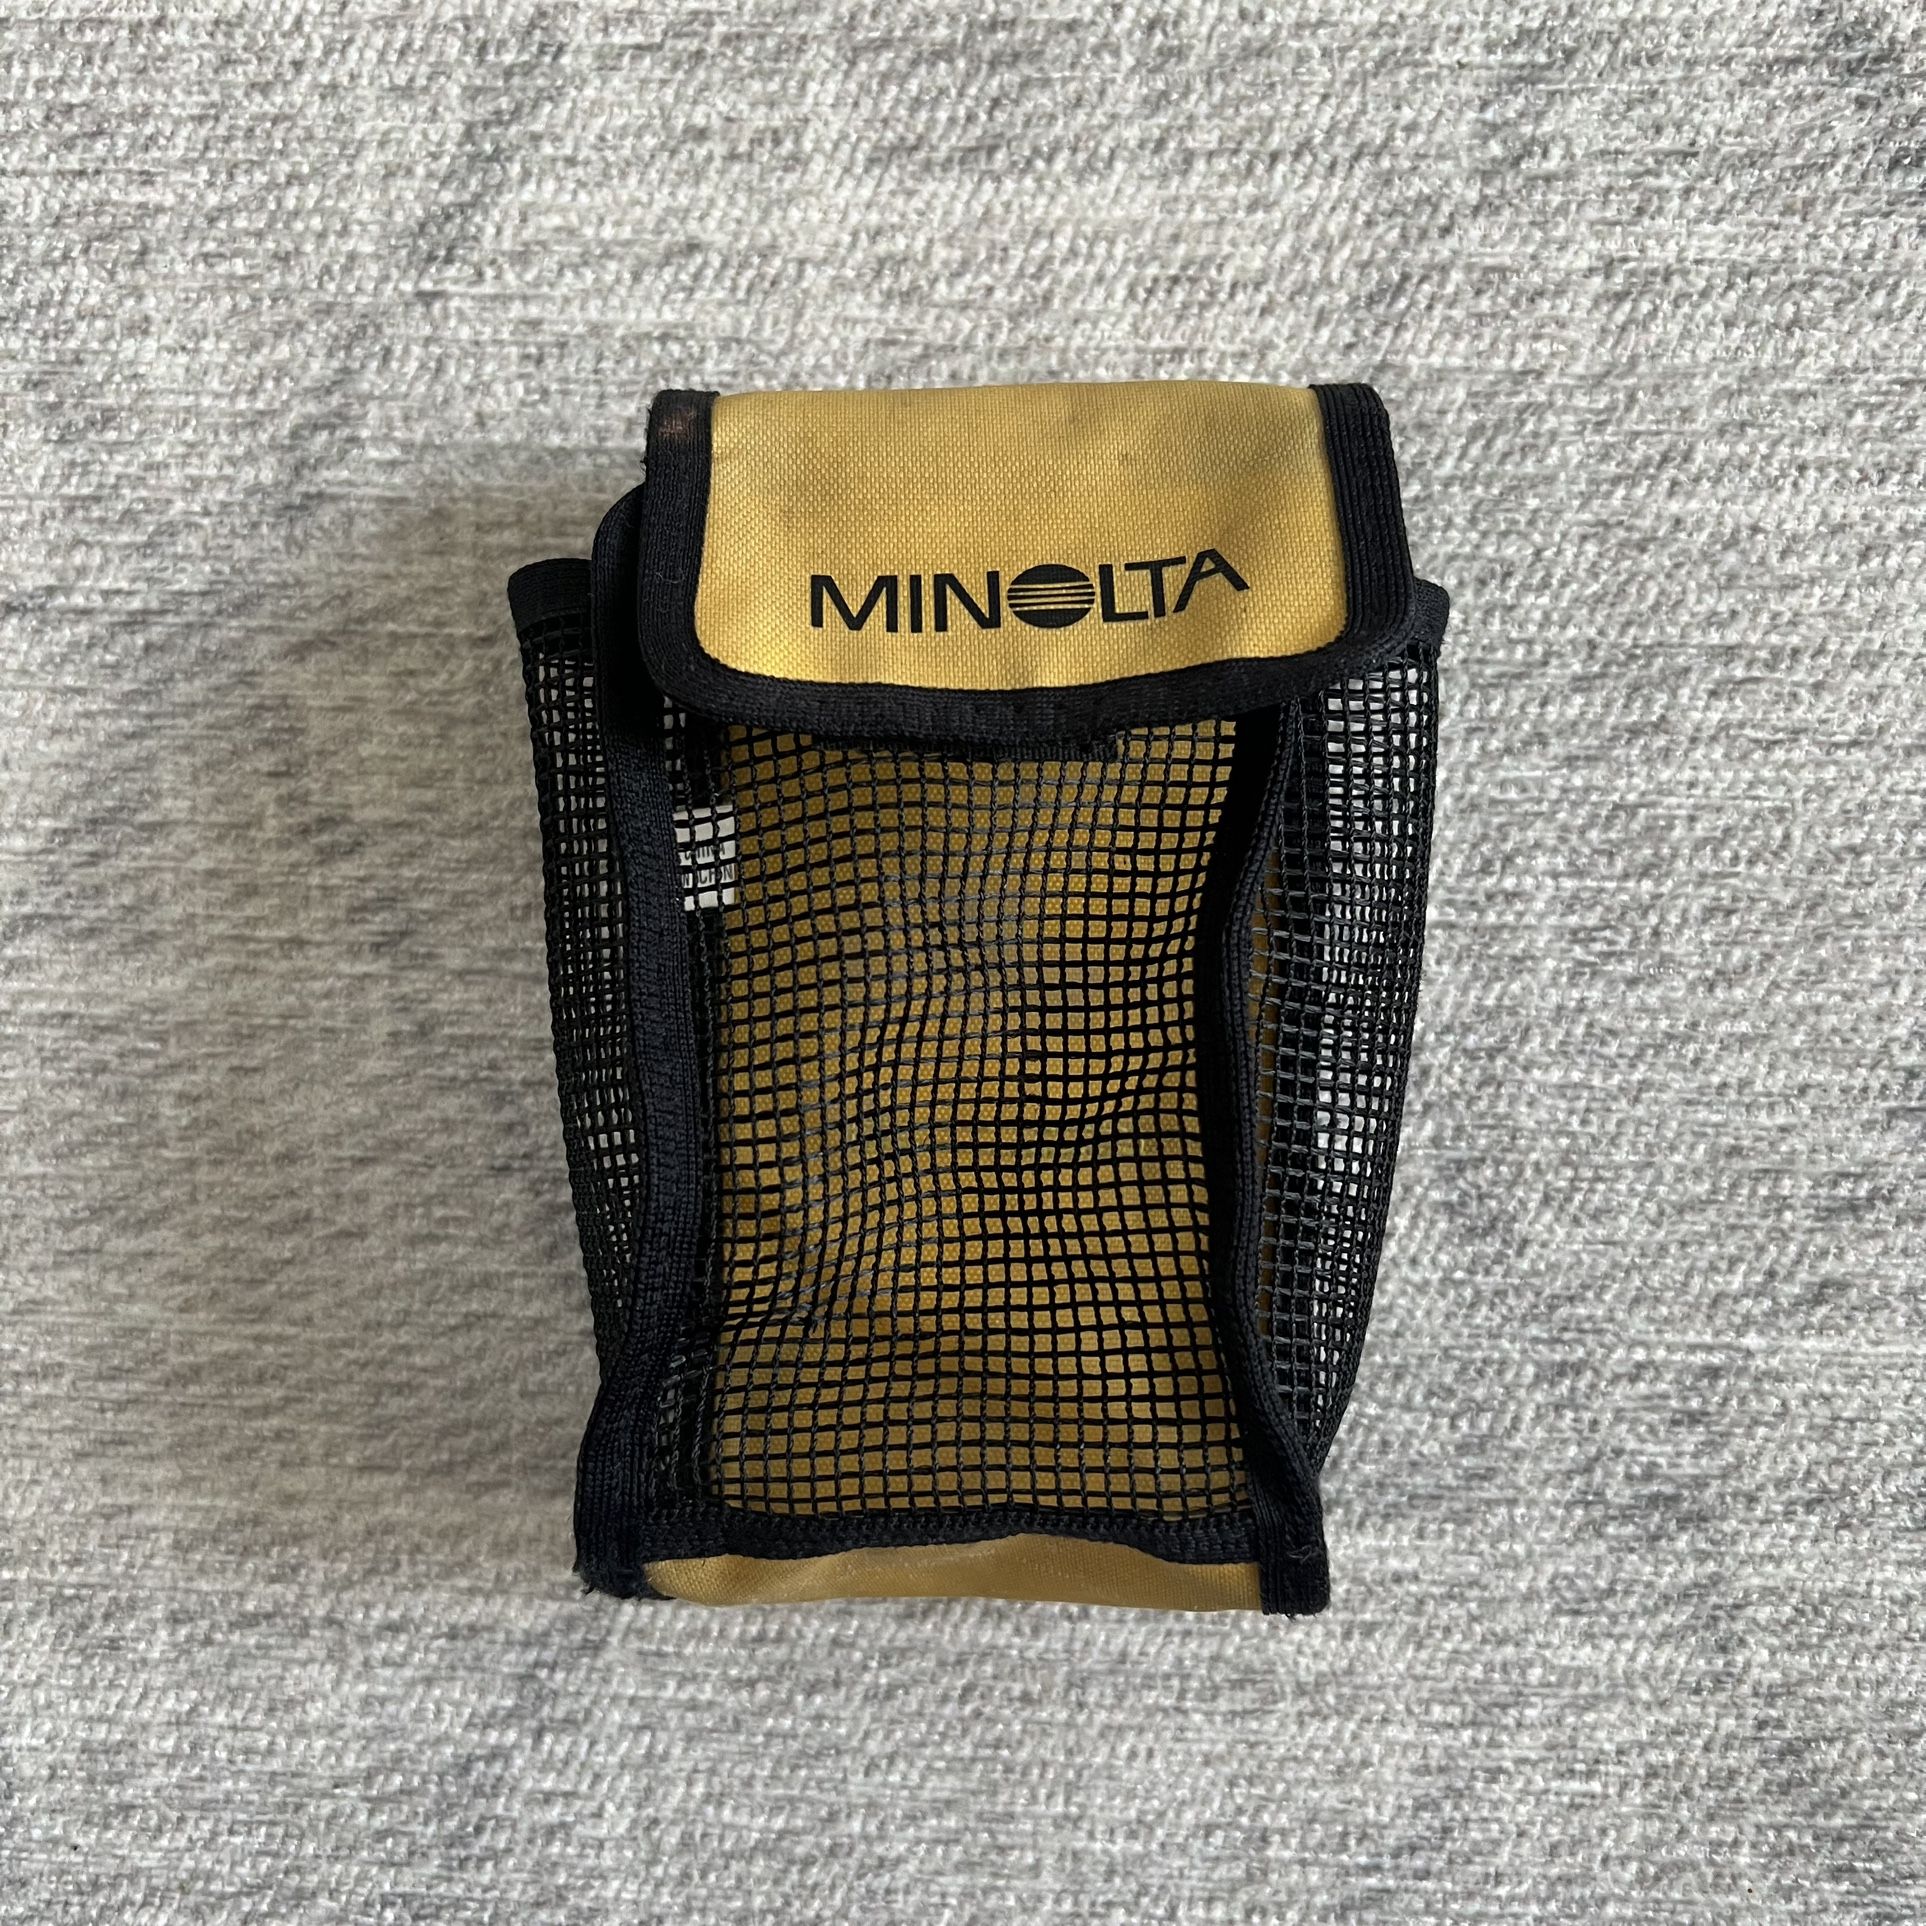 Vintage 1990s Minolta Black/Yellow Mini Camera Bag Carrying Case